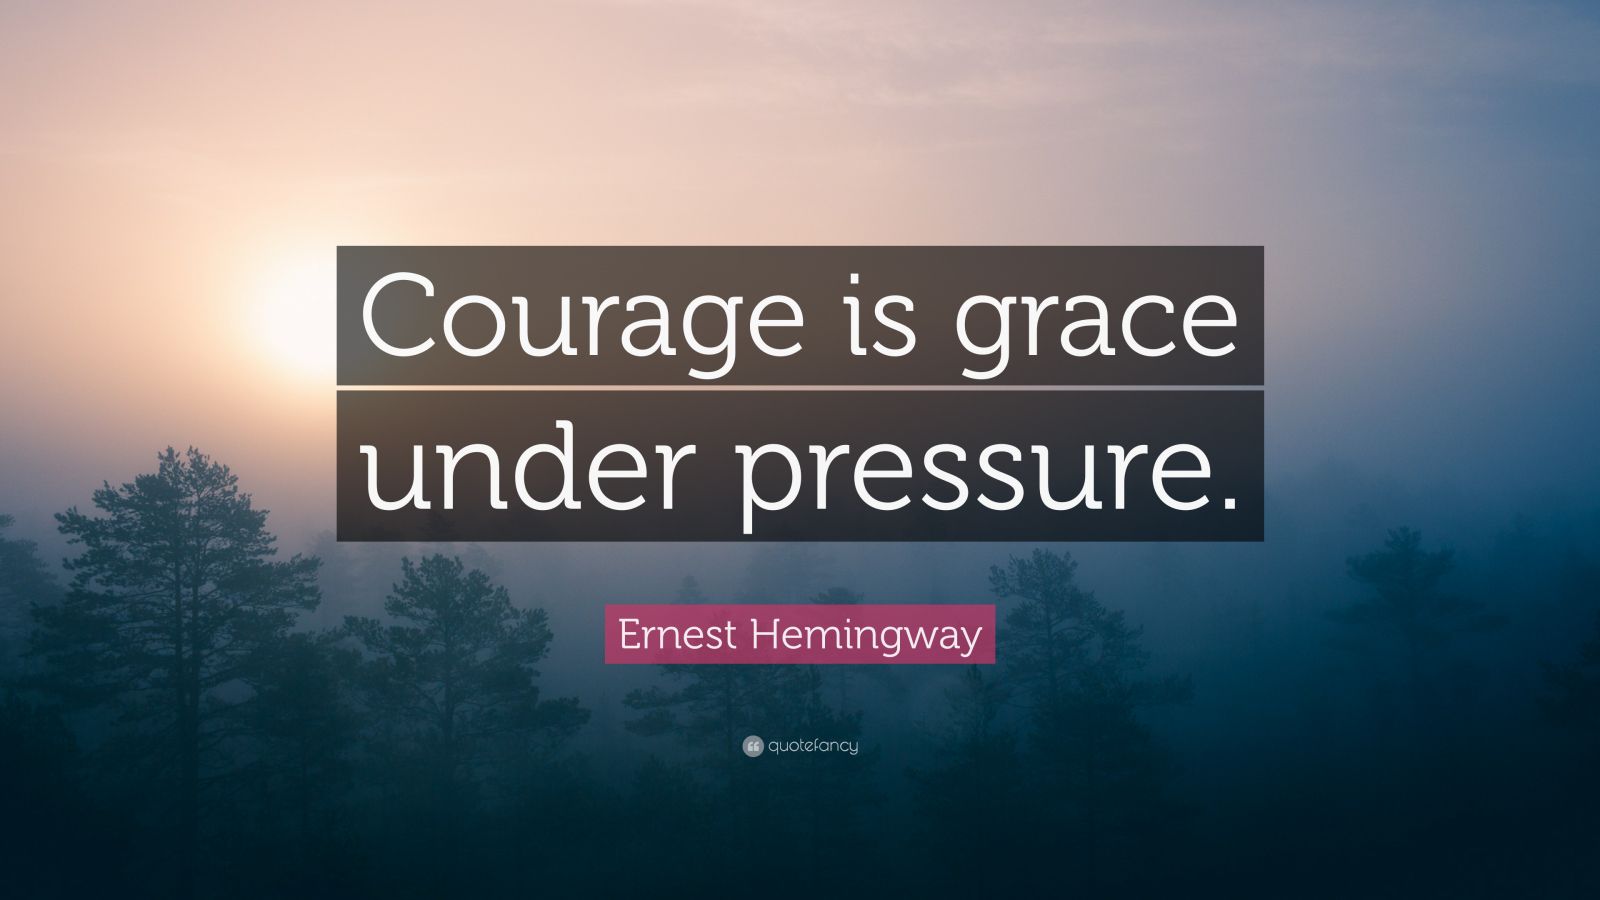 Ernest Hemingway Quote: “Courage is grace under pressure.” (19